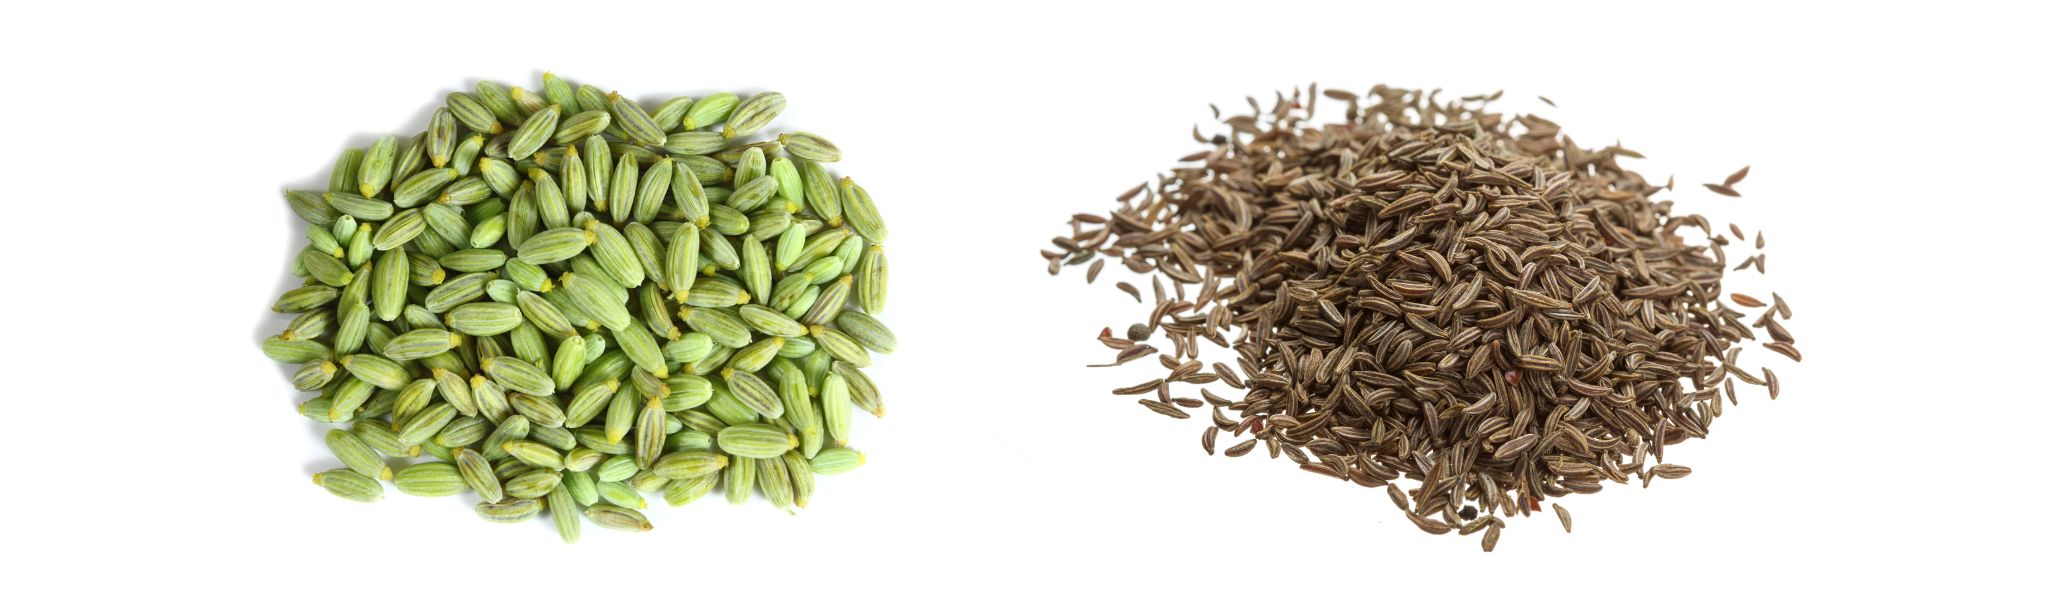 Fennel Seeds vs. Caraway Seeds